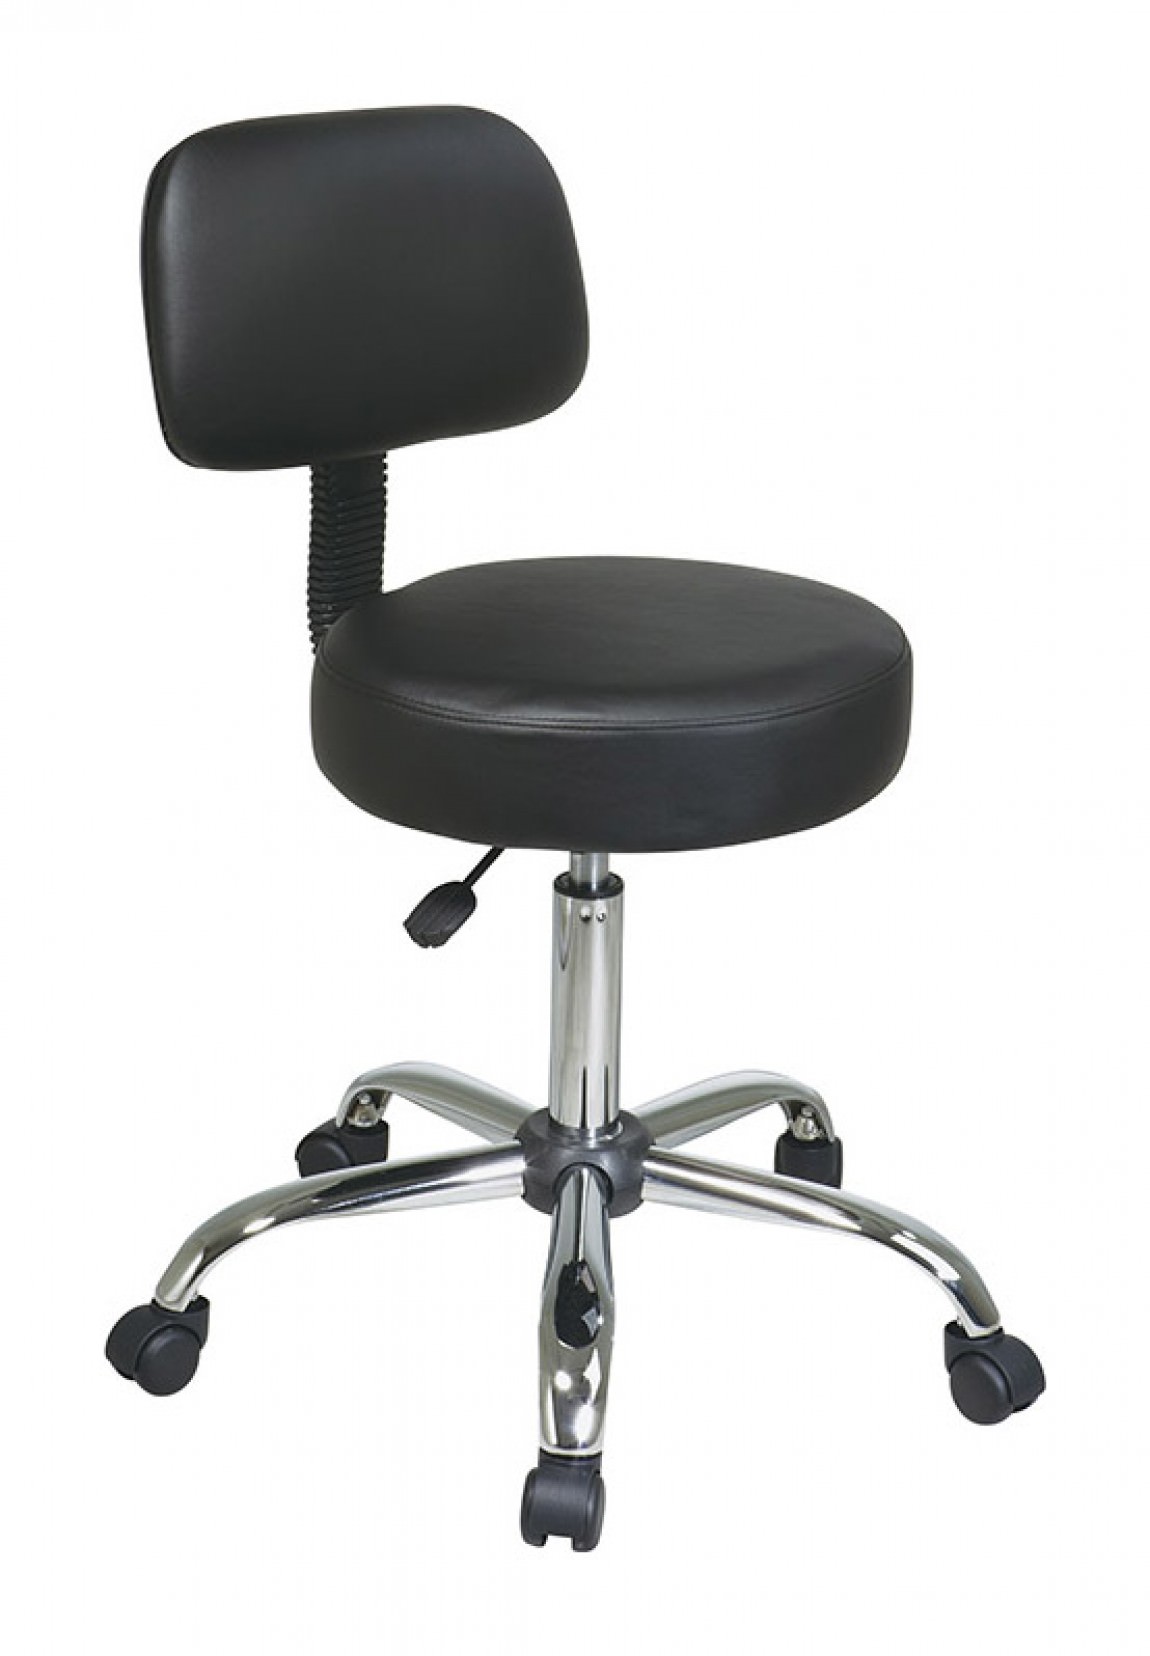 https://madisonliquidators.com/images/p/1150/24870-rolling-stool-chair-1.jpg